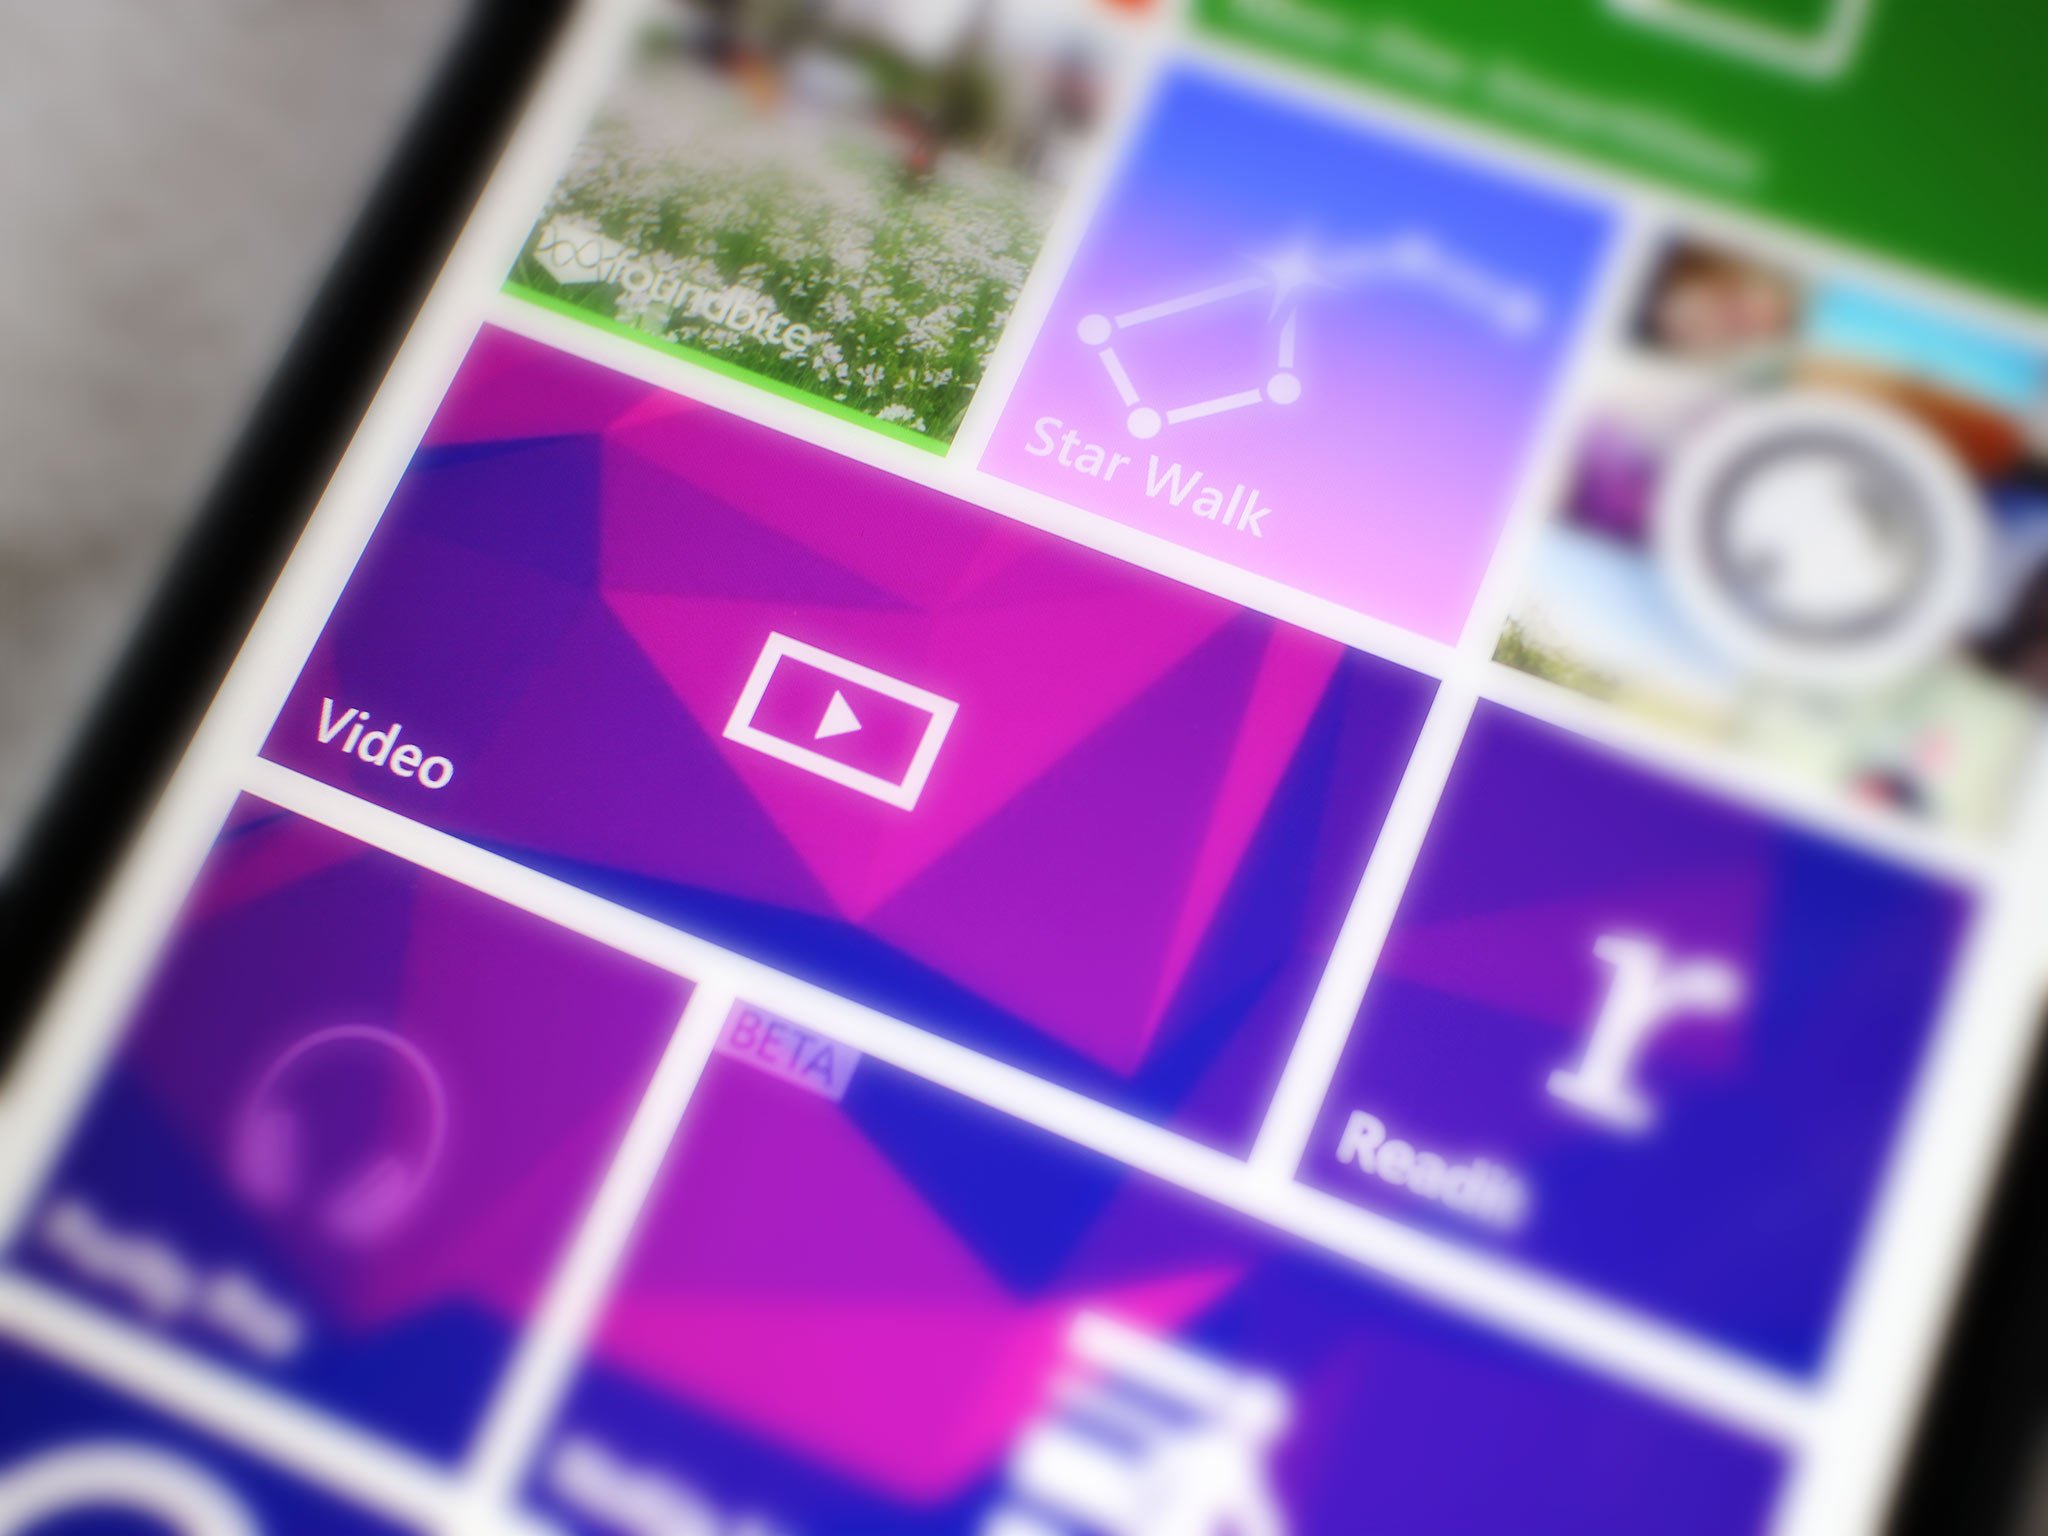 Xbox_Video_Transparent_Tile.jpg